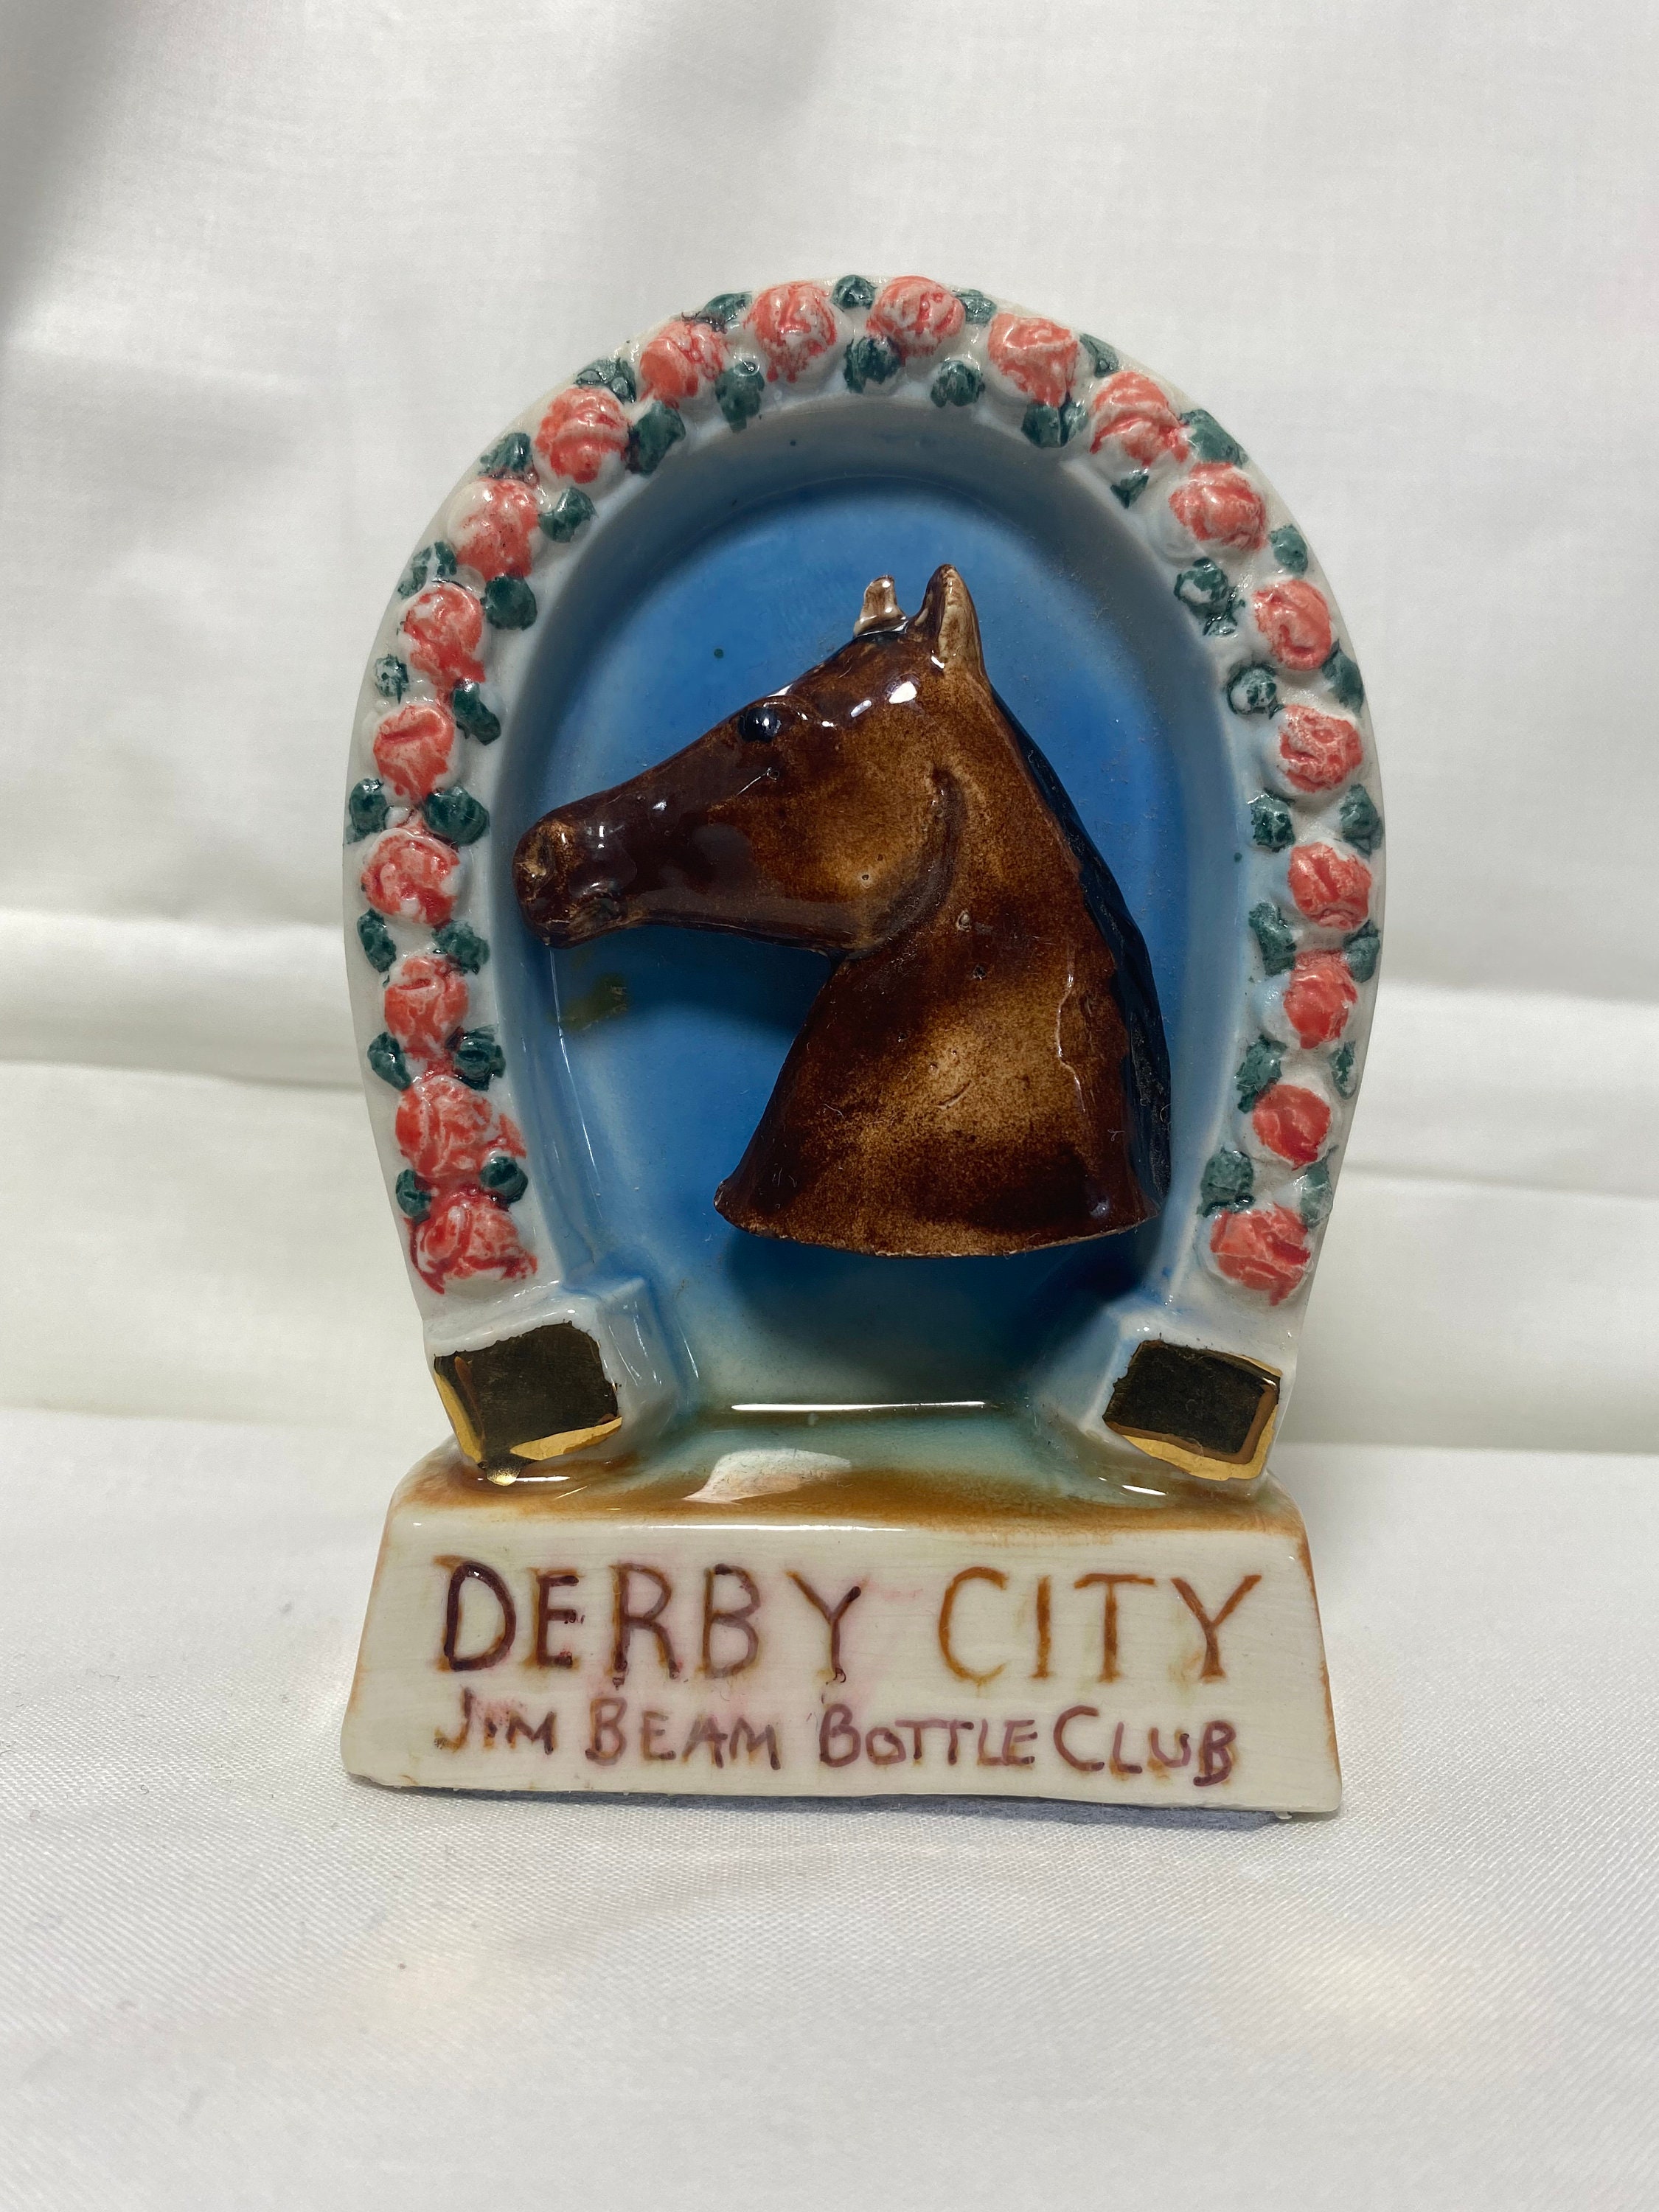 SHOT GLASS RARE JIM BEAM BOTTLE CLUB DERBY CITY 1976 LOUISVILLE